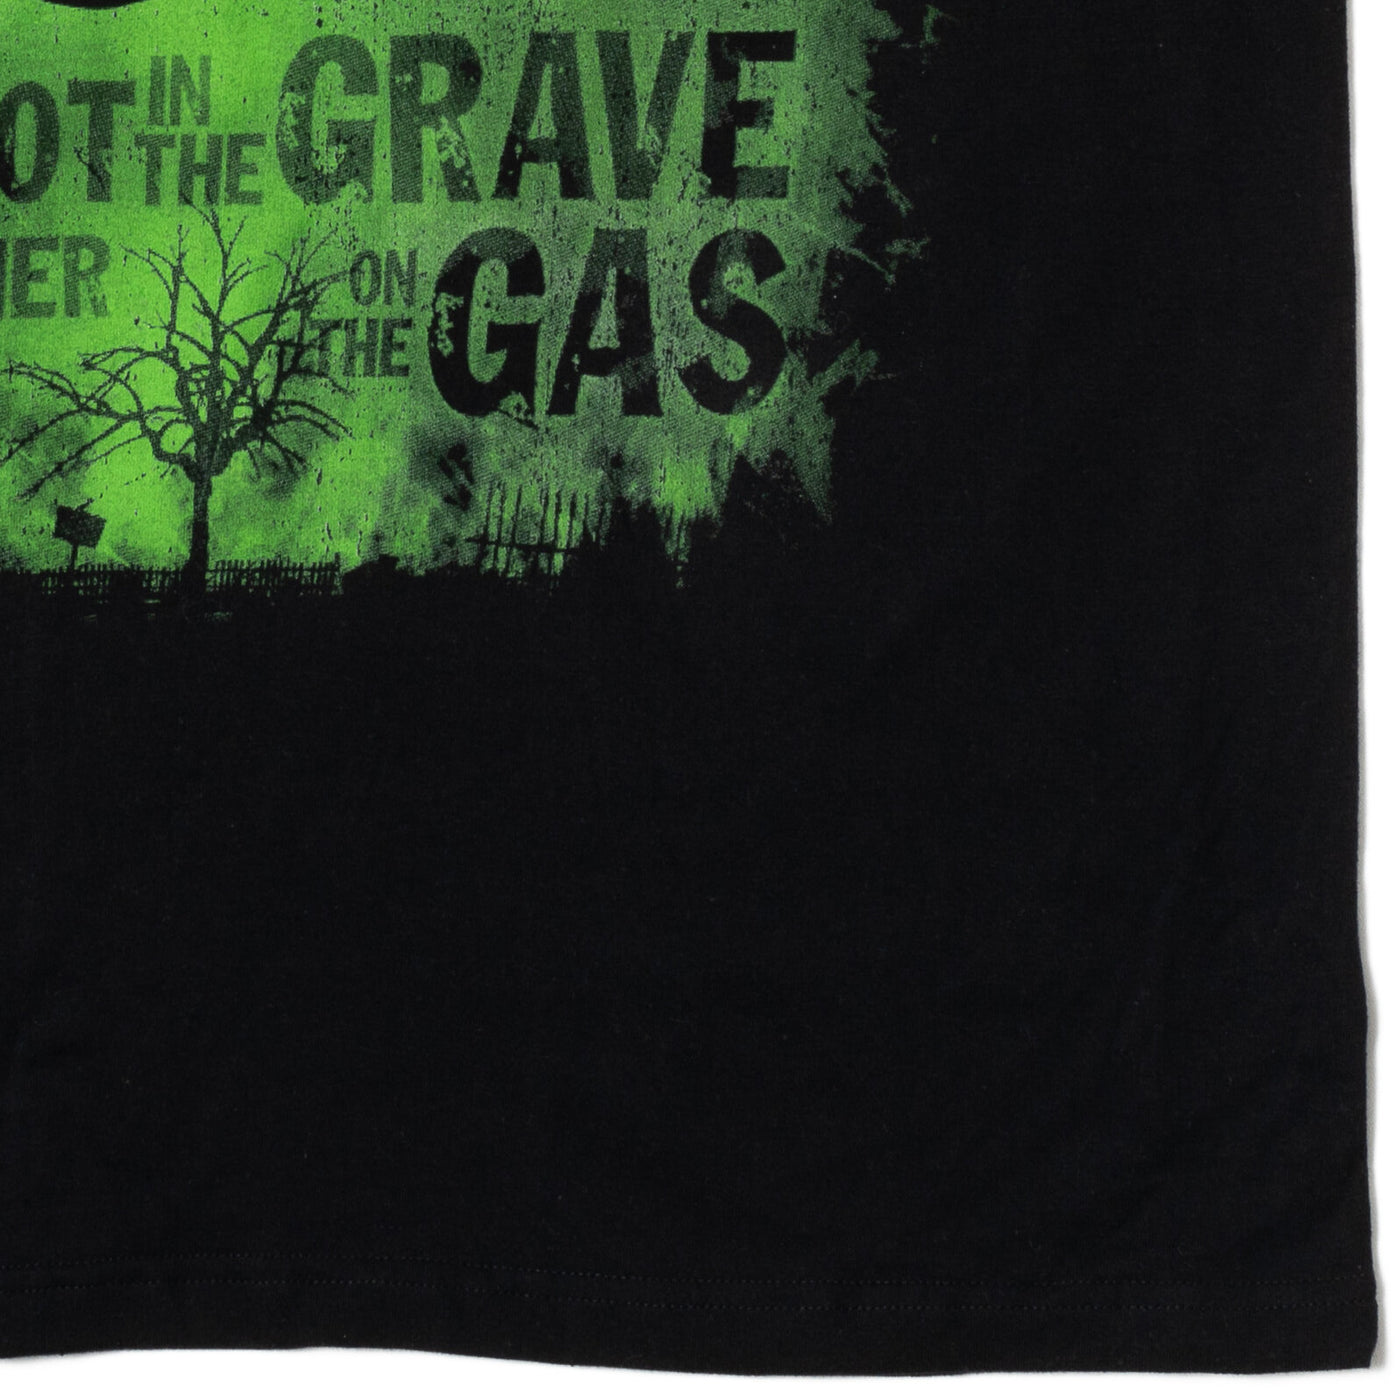 Monster Jam Grave Digger T-Shirt